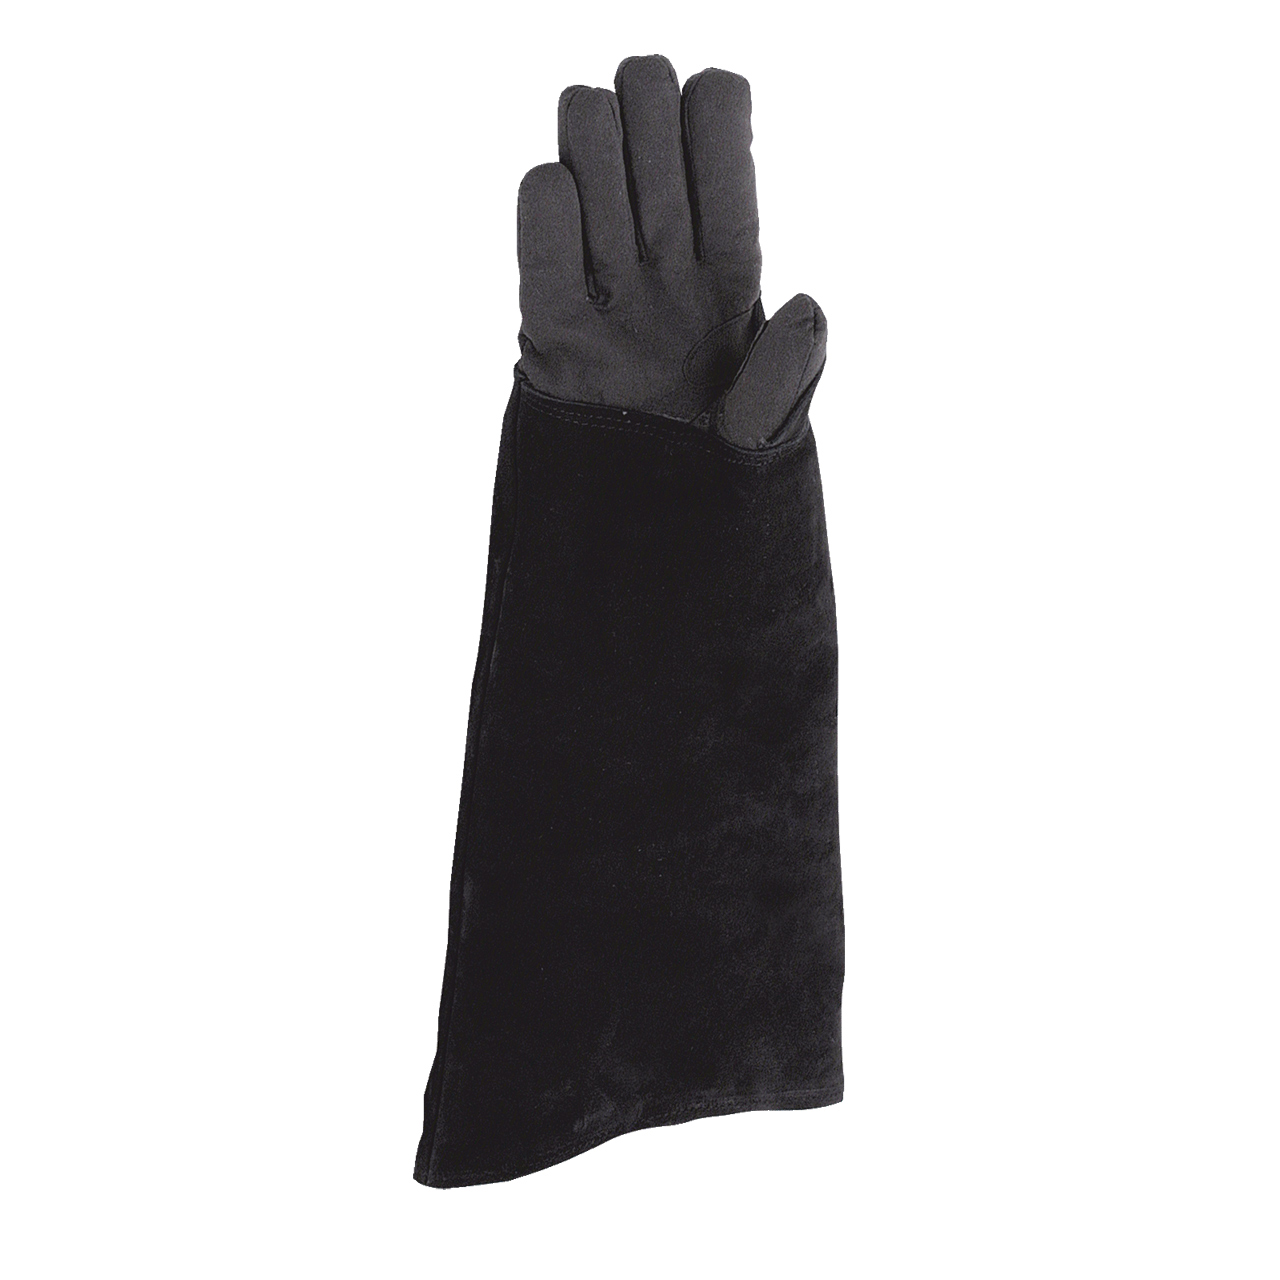 glove for trainer / master model "M"